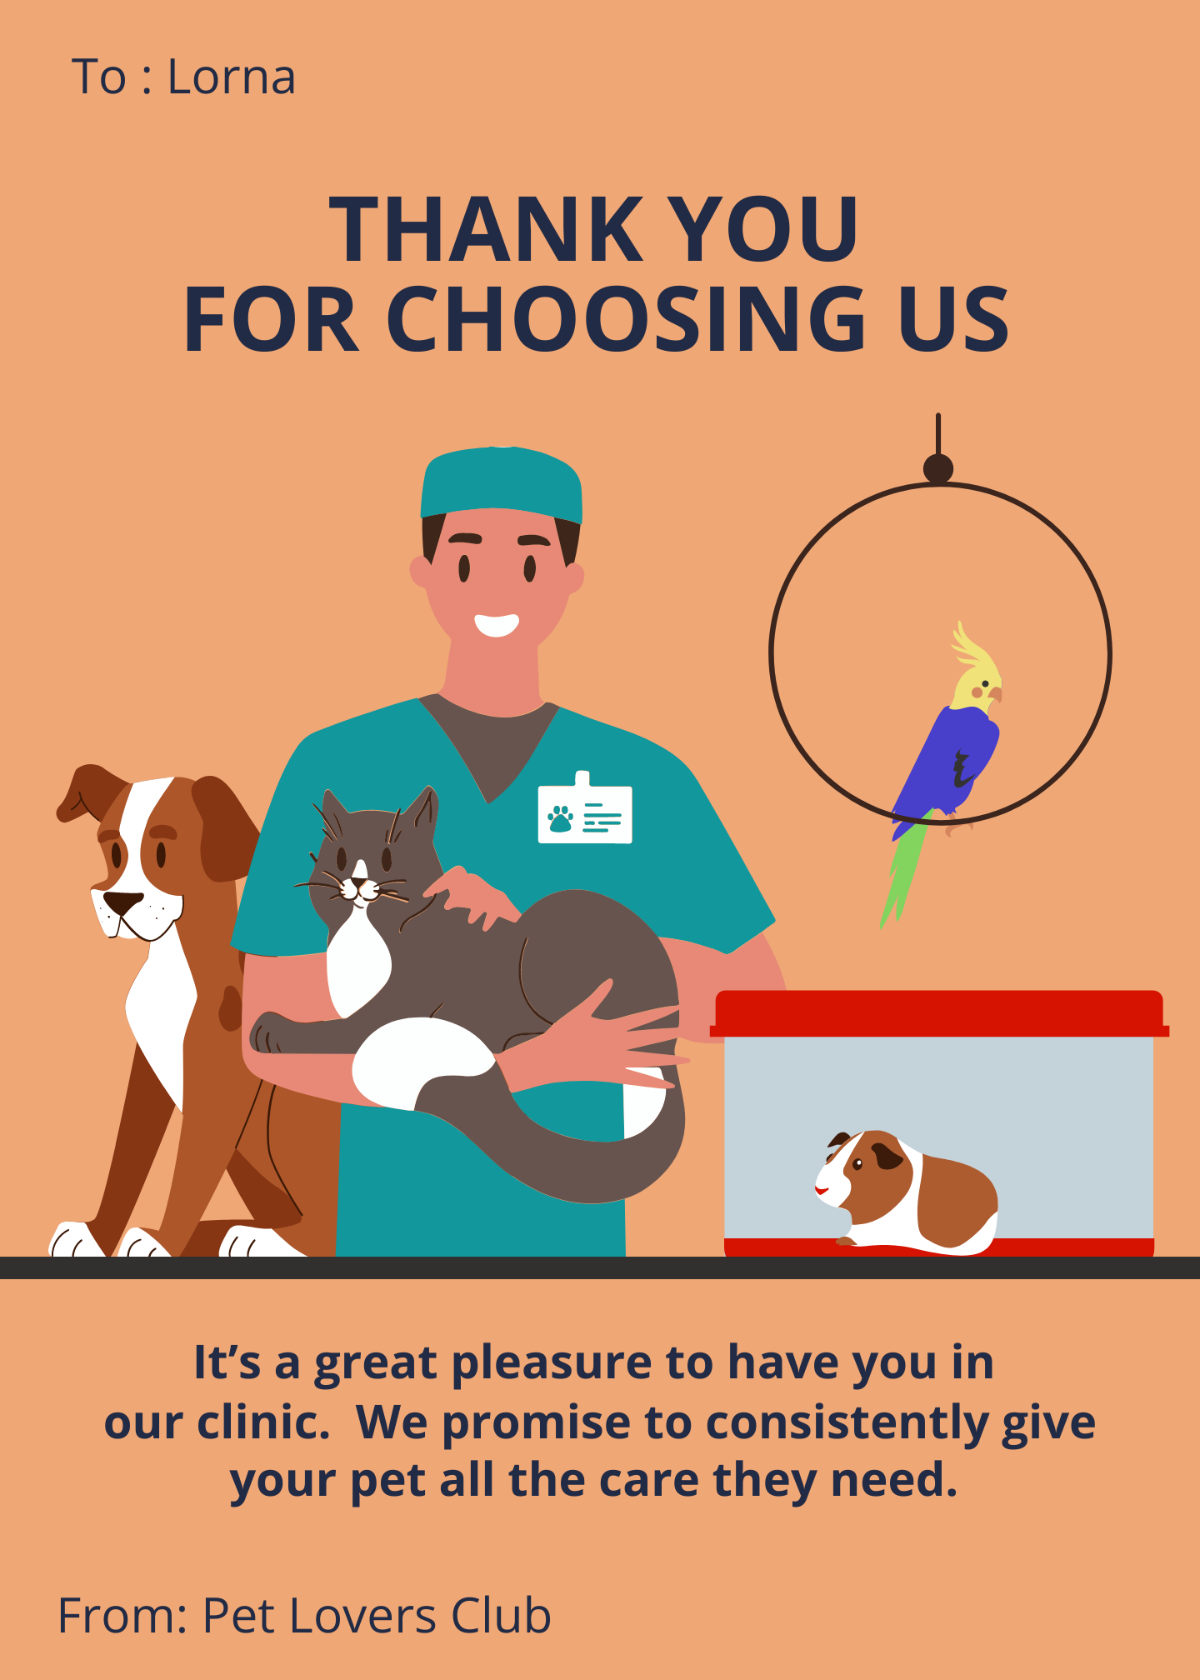 Pet Care Greeting Card Template